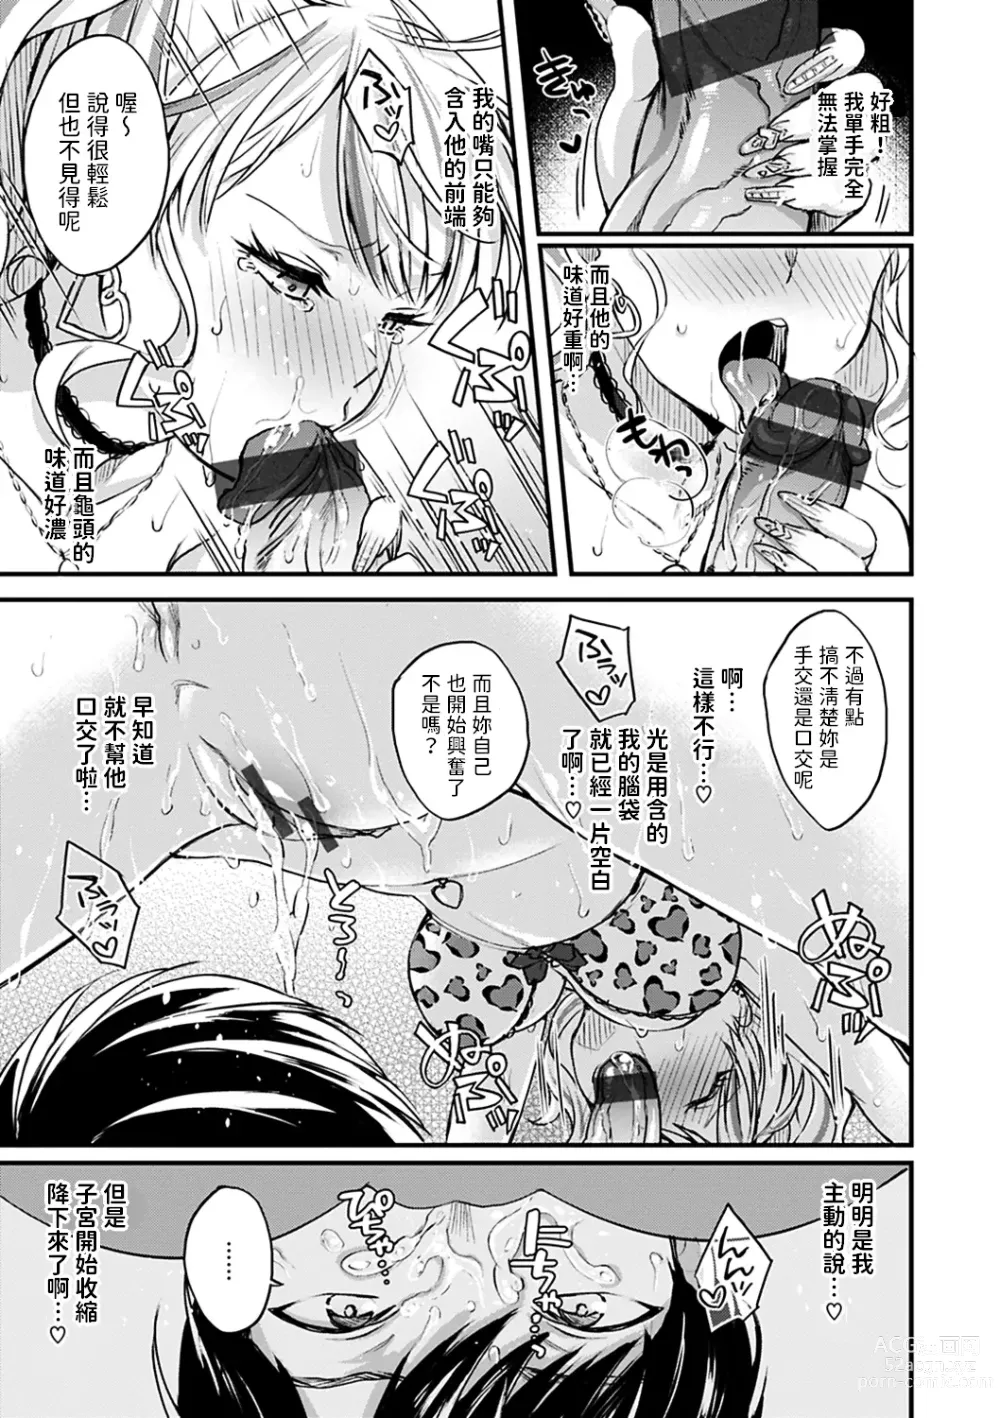 Page 15 of manga Deka Chin Shika Katan!